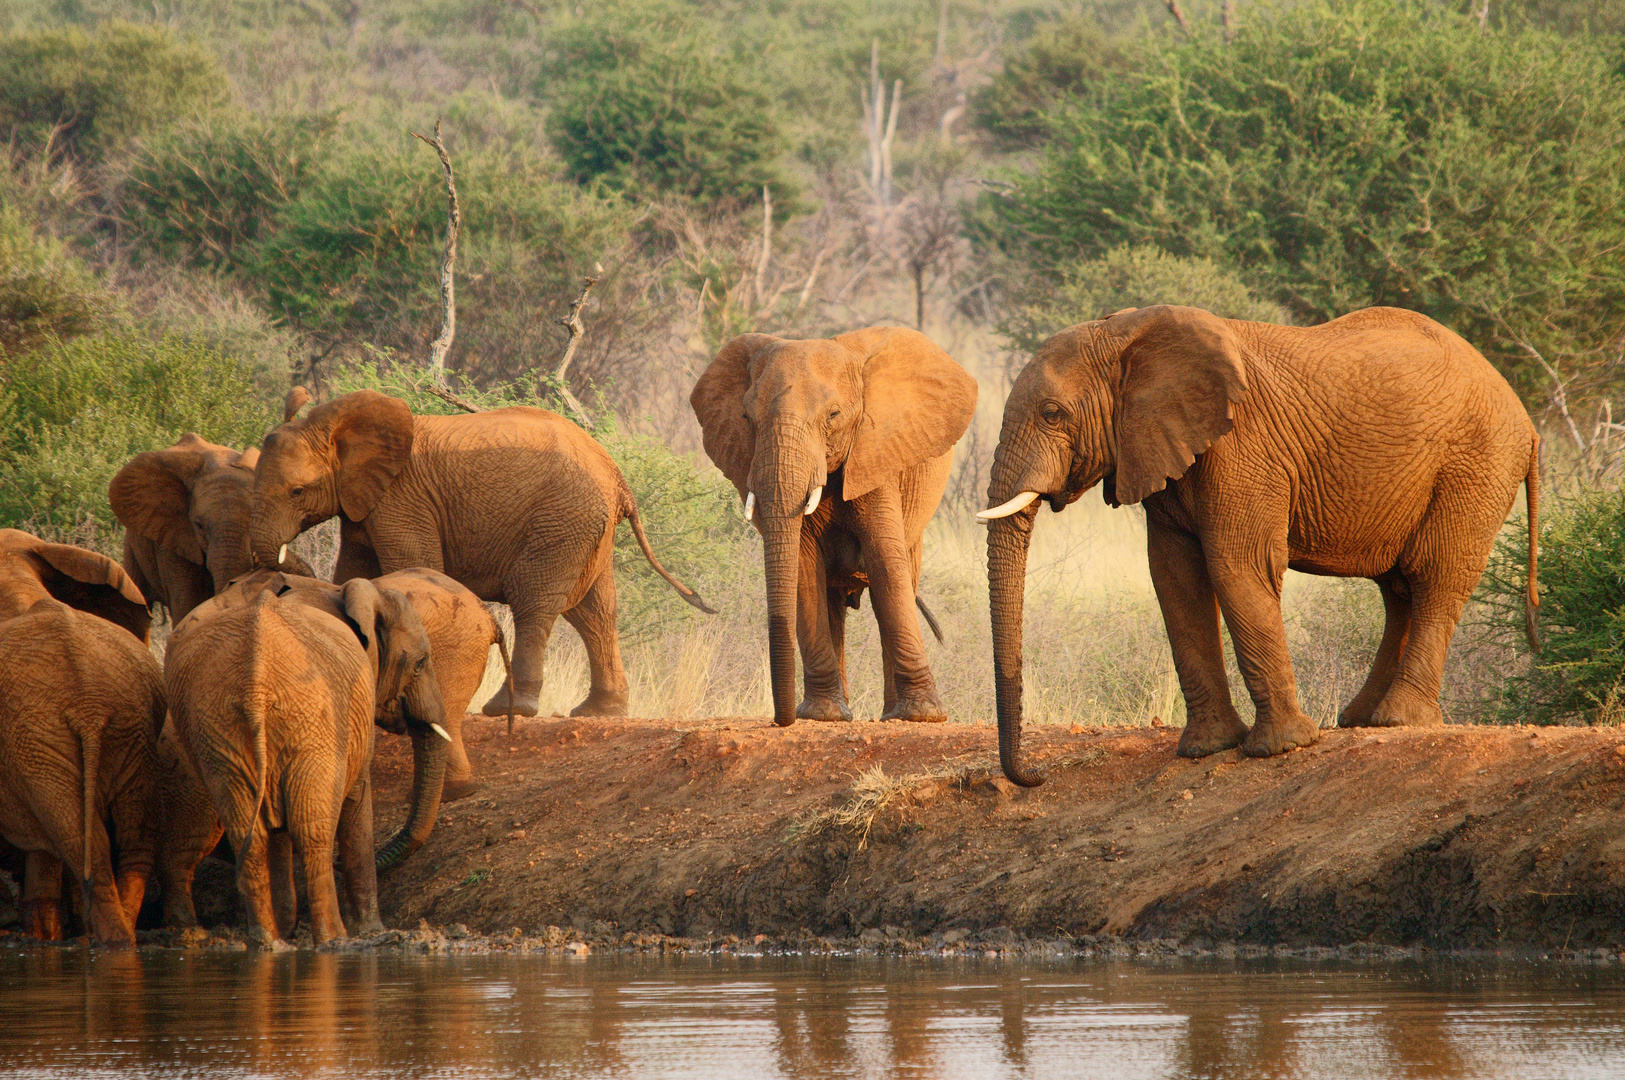 Elefanten im Madikwepark ZA